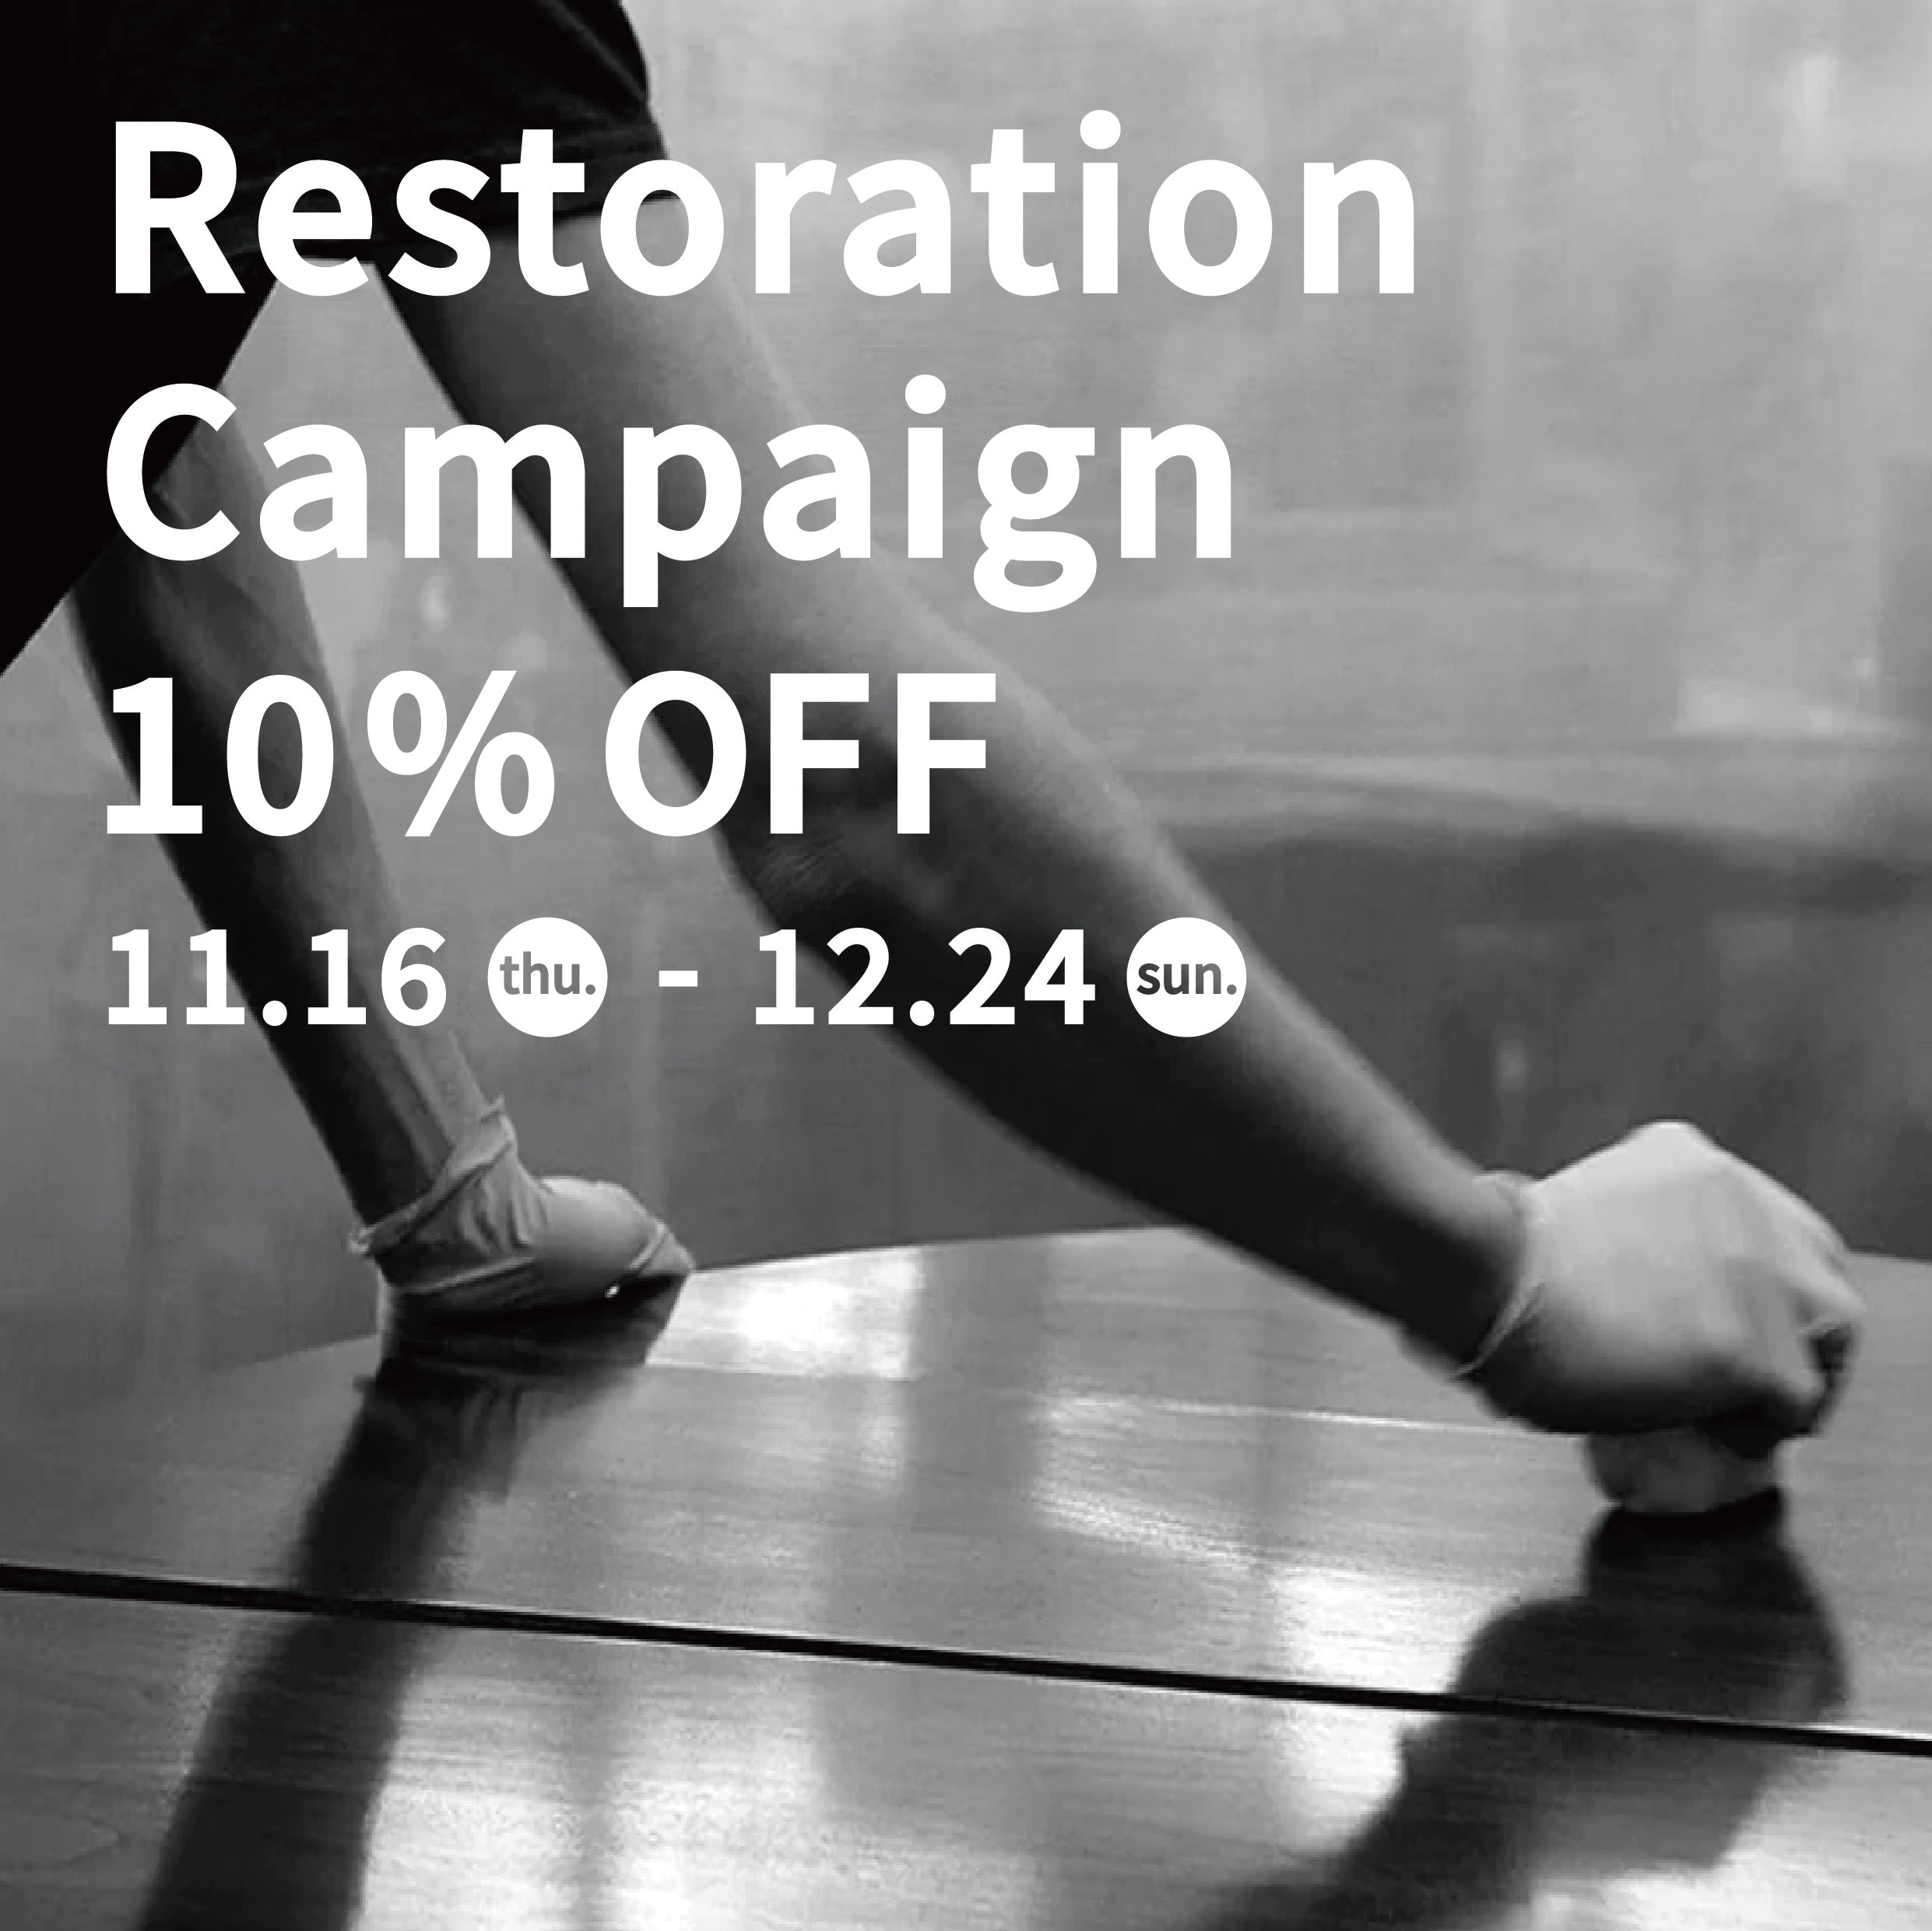 Restoration Campaign